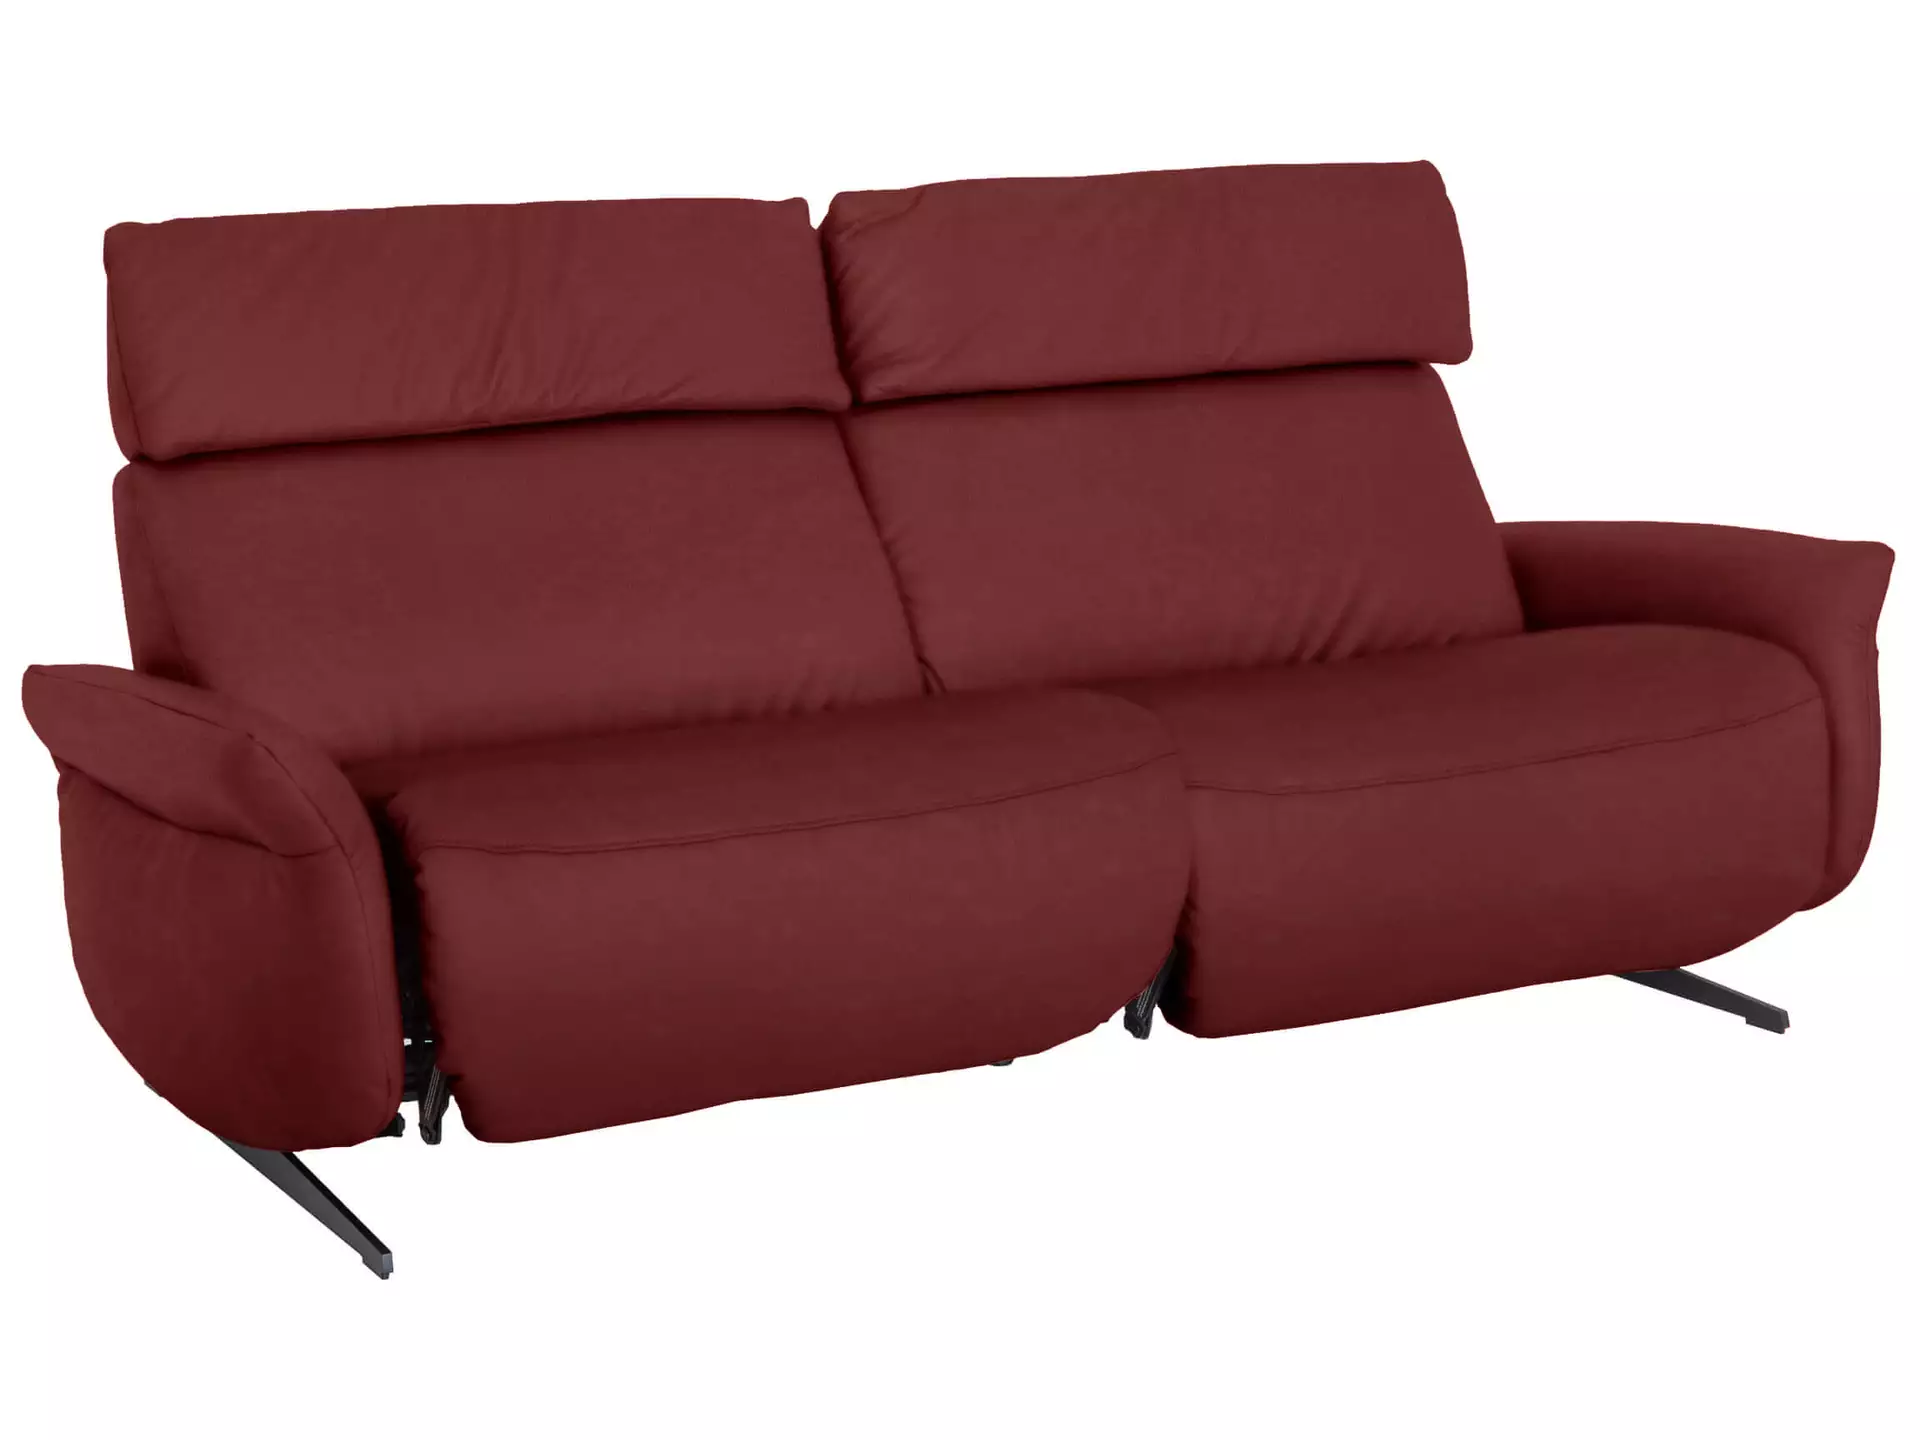 Sofa Patricia Basic B: 206 cm Himolla / Farbe: Merlot / Material: Leder Basic